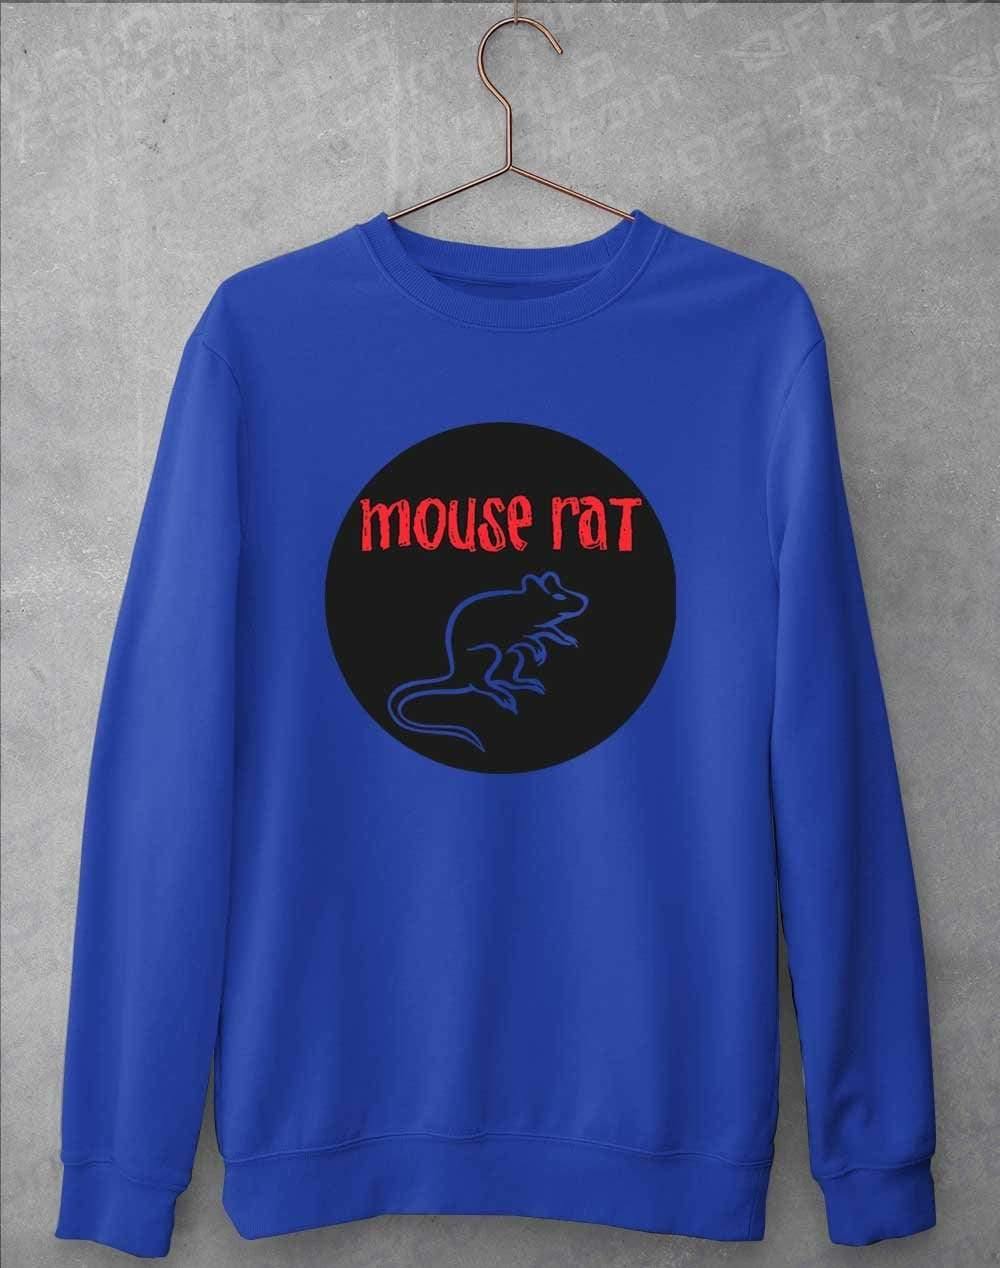 Mouse Rat Round Logo Sweatshirt S / Royal Blue  - Off World Tees